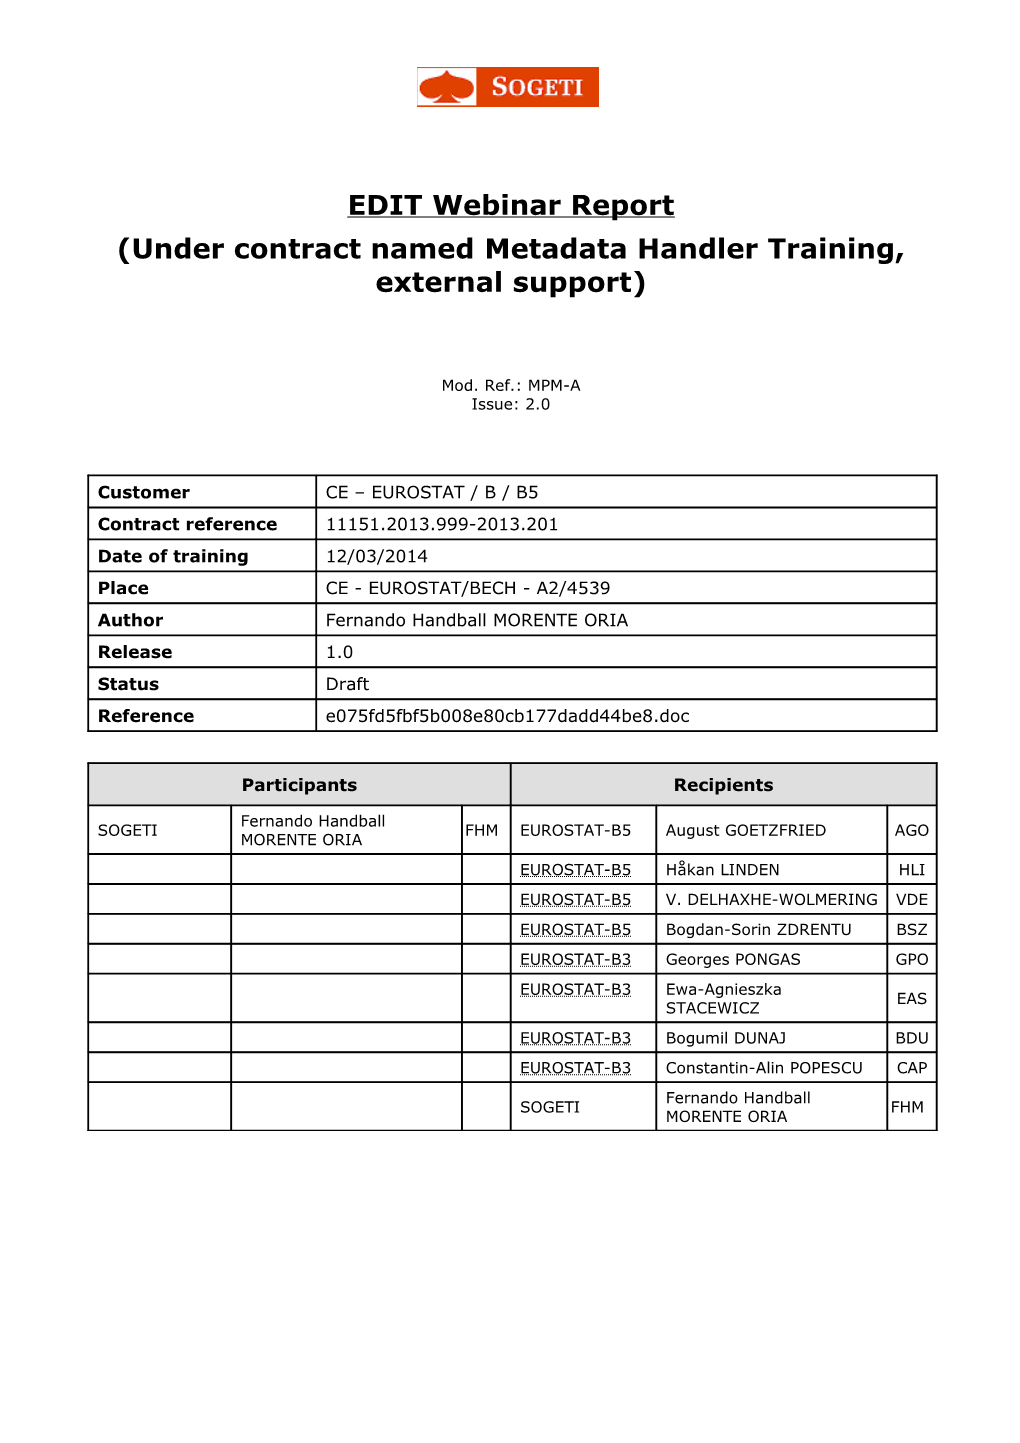 Under Contract Named Metadata Handler Training, External Support